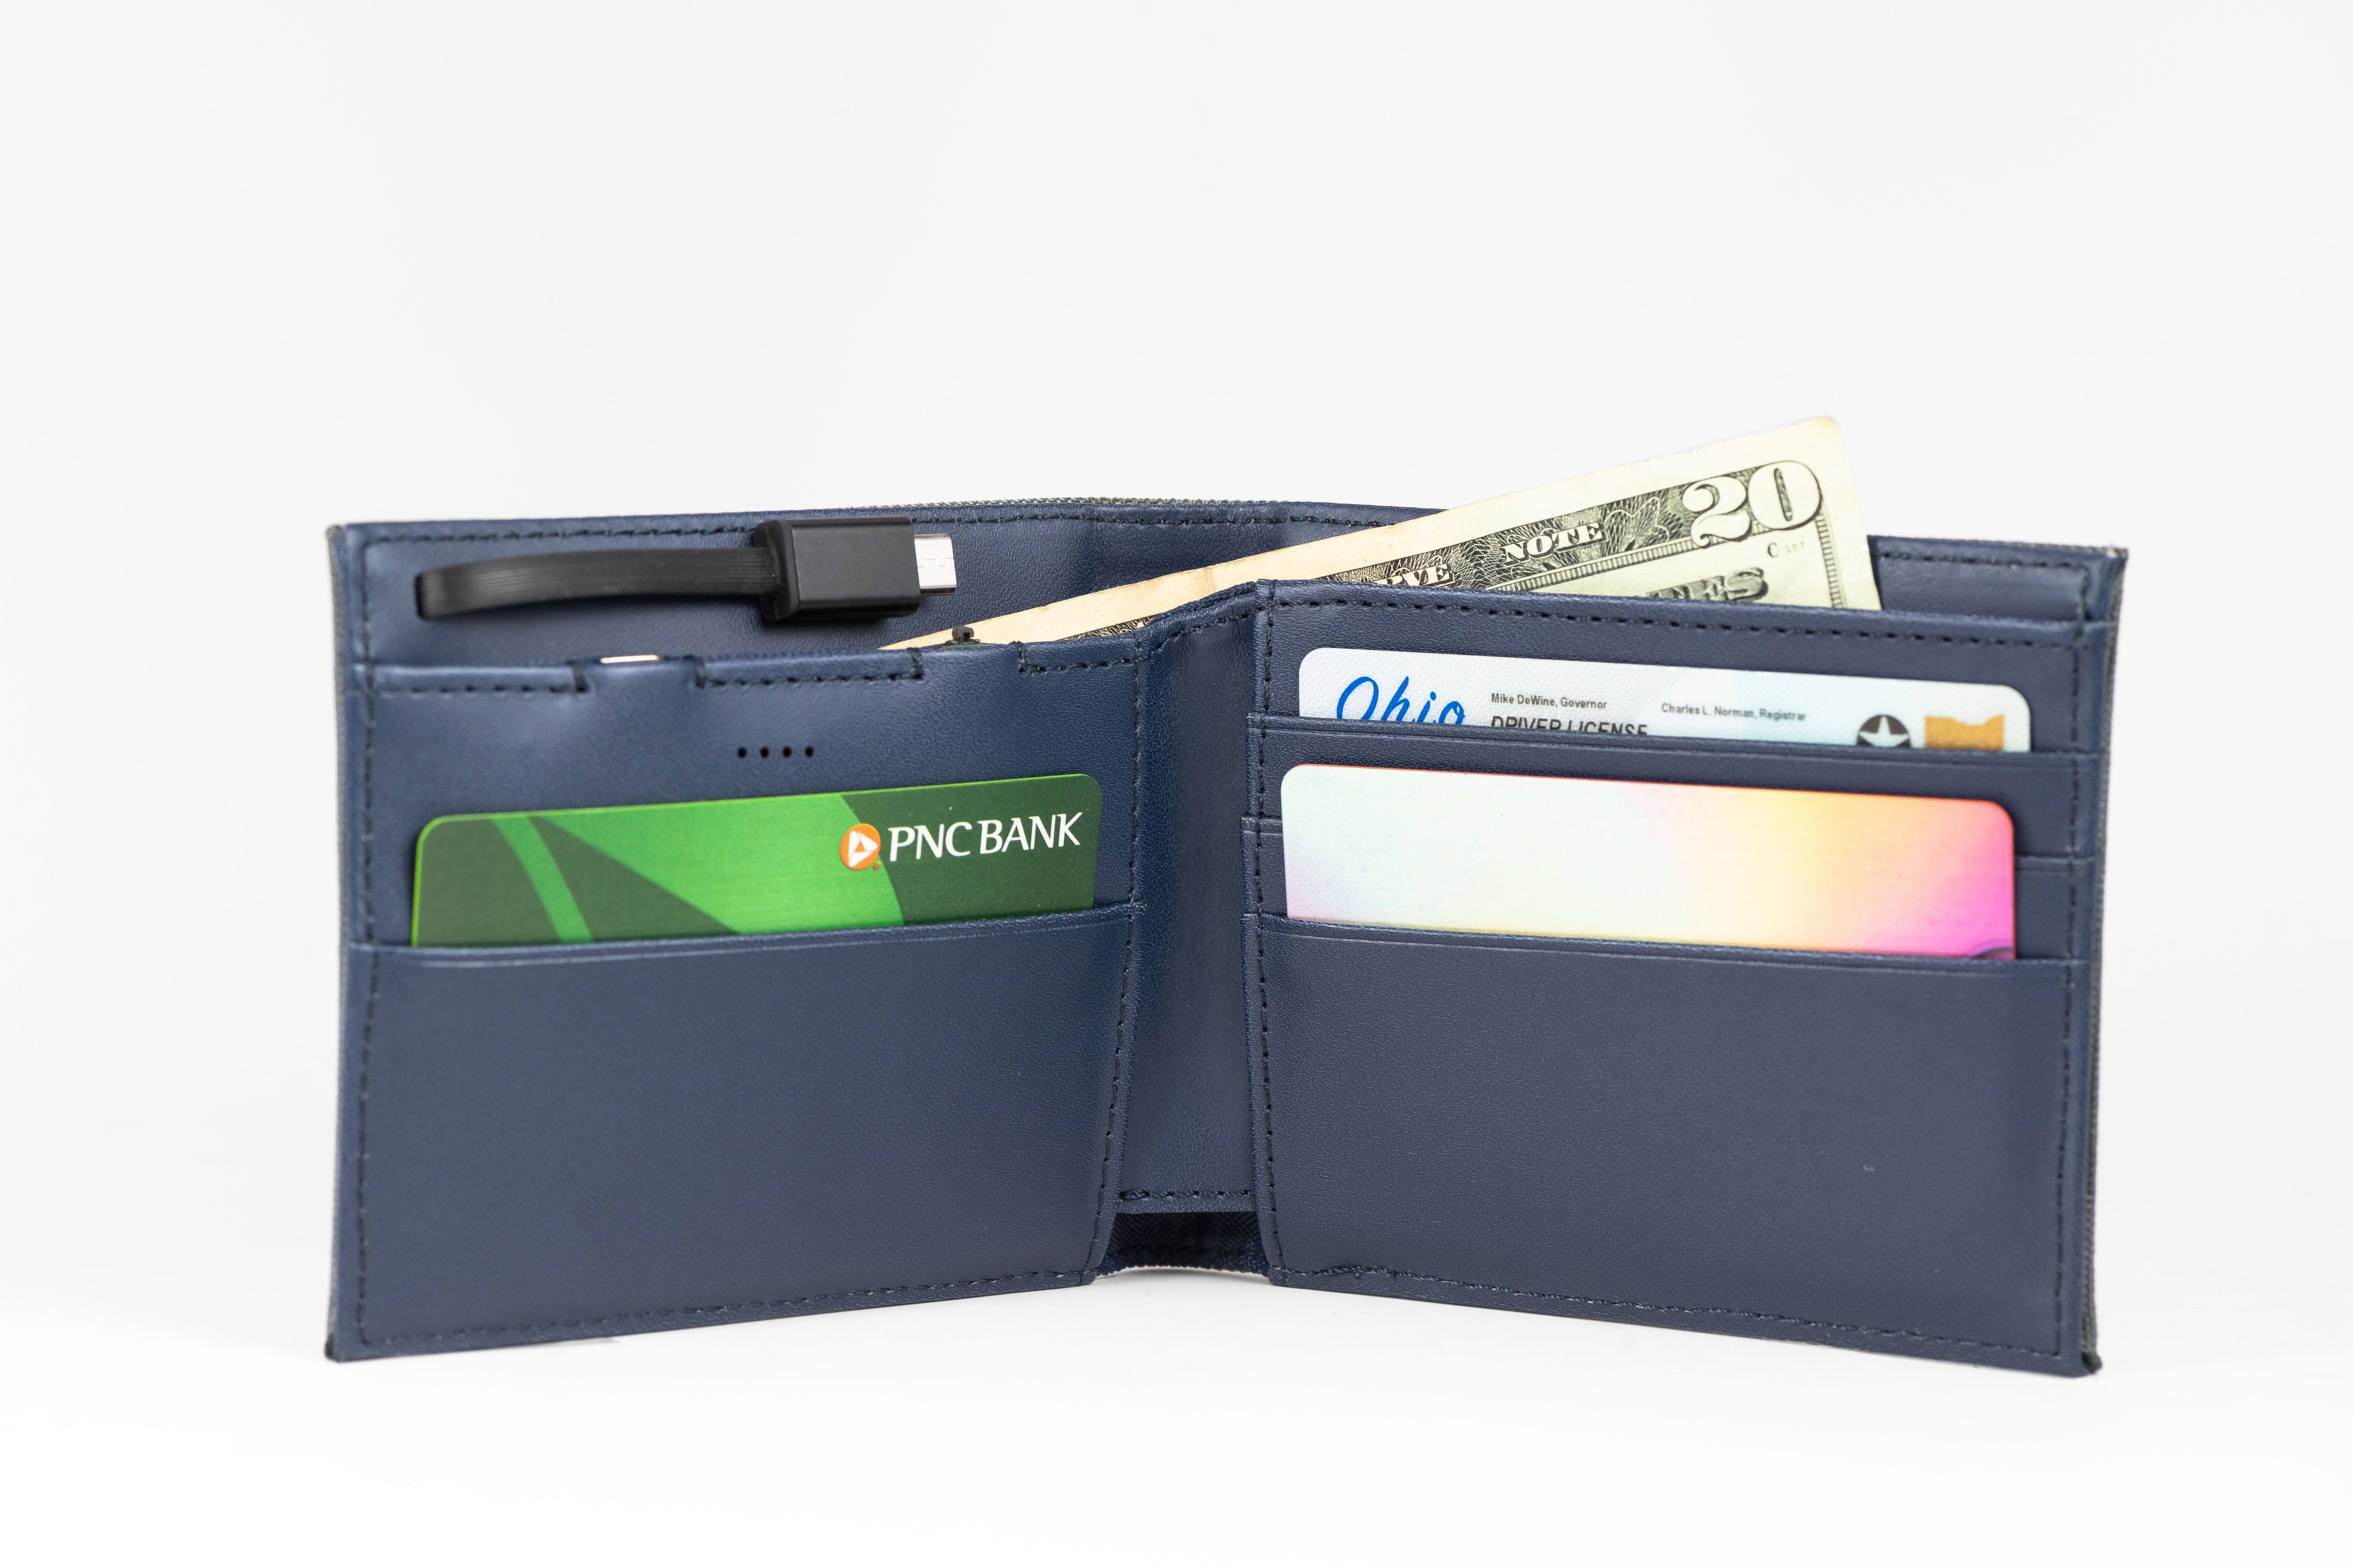 PowerBank Wallet